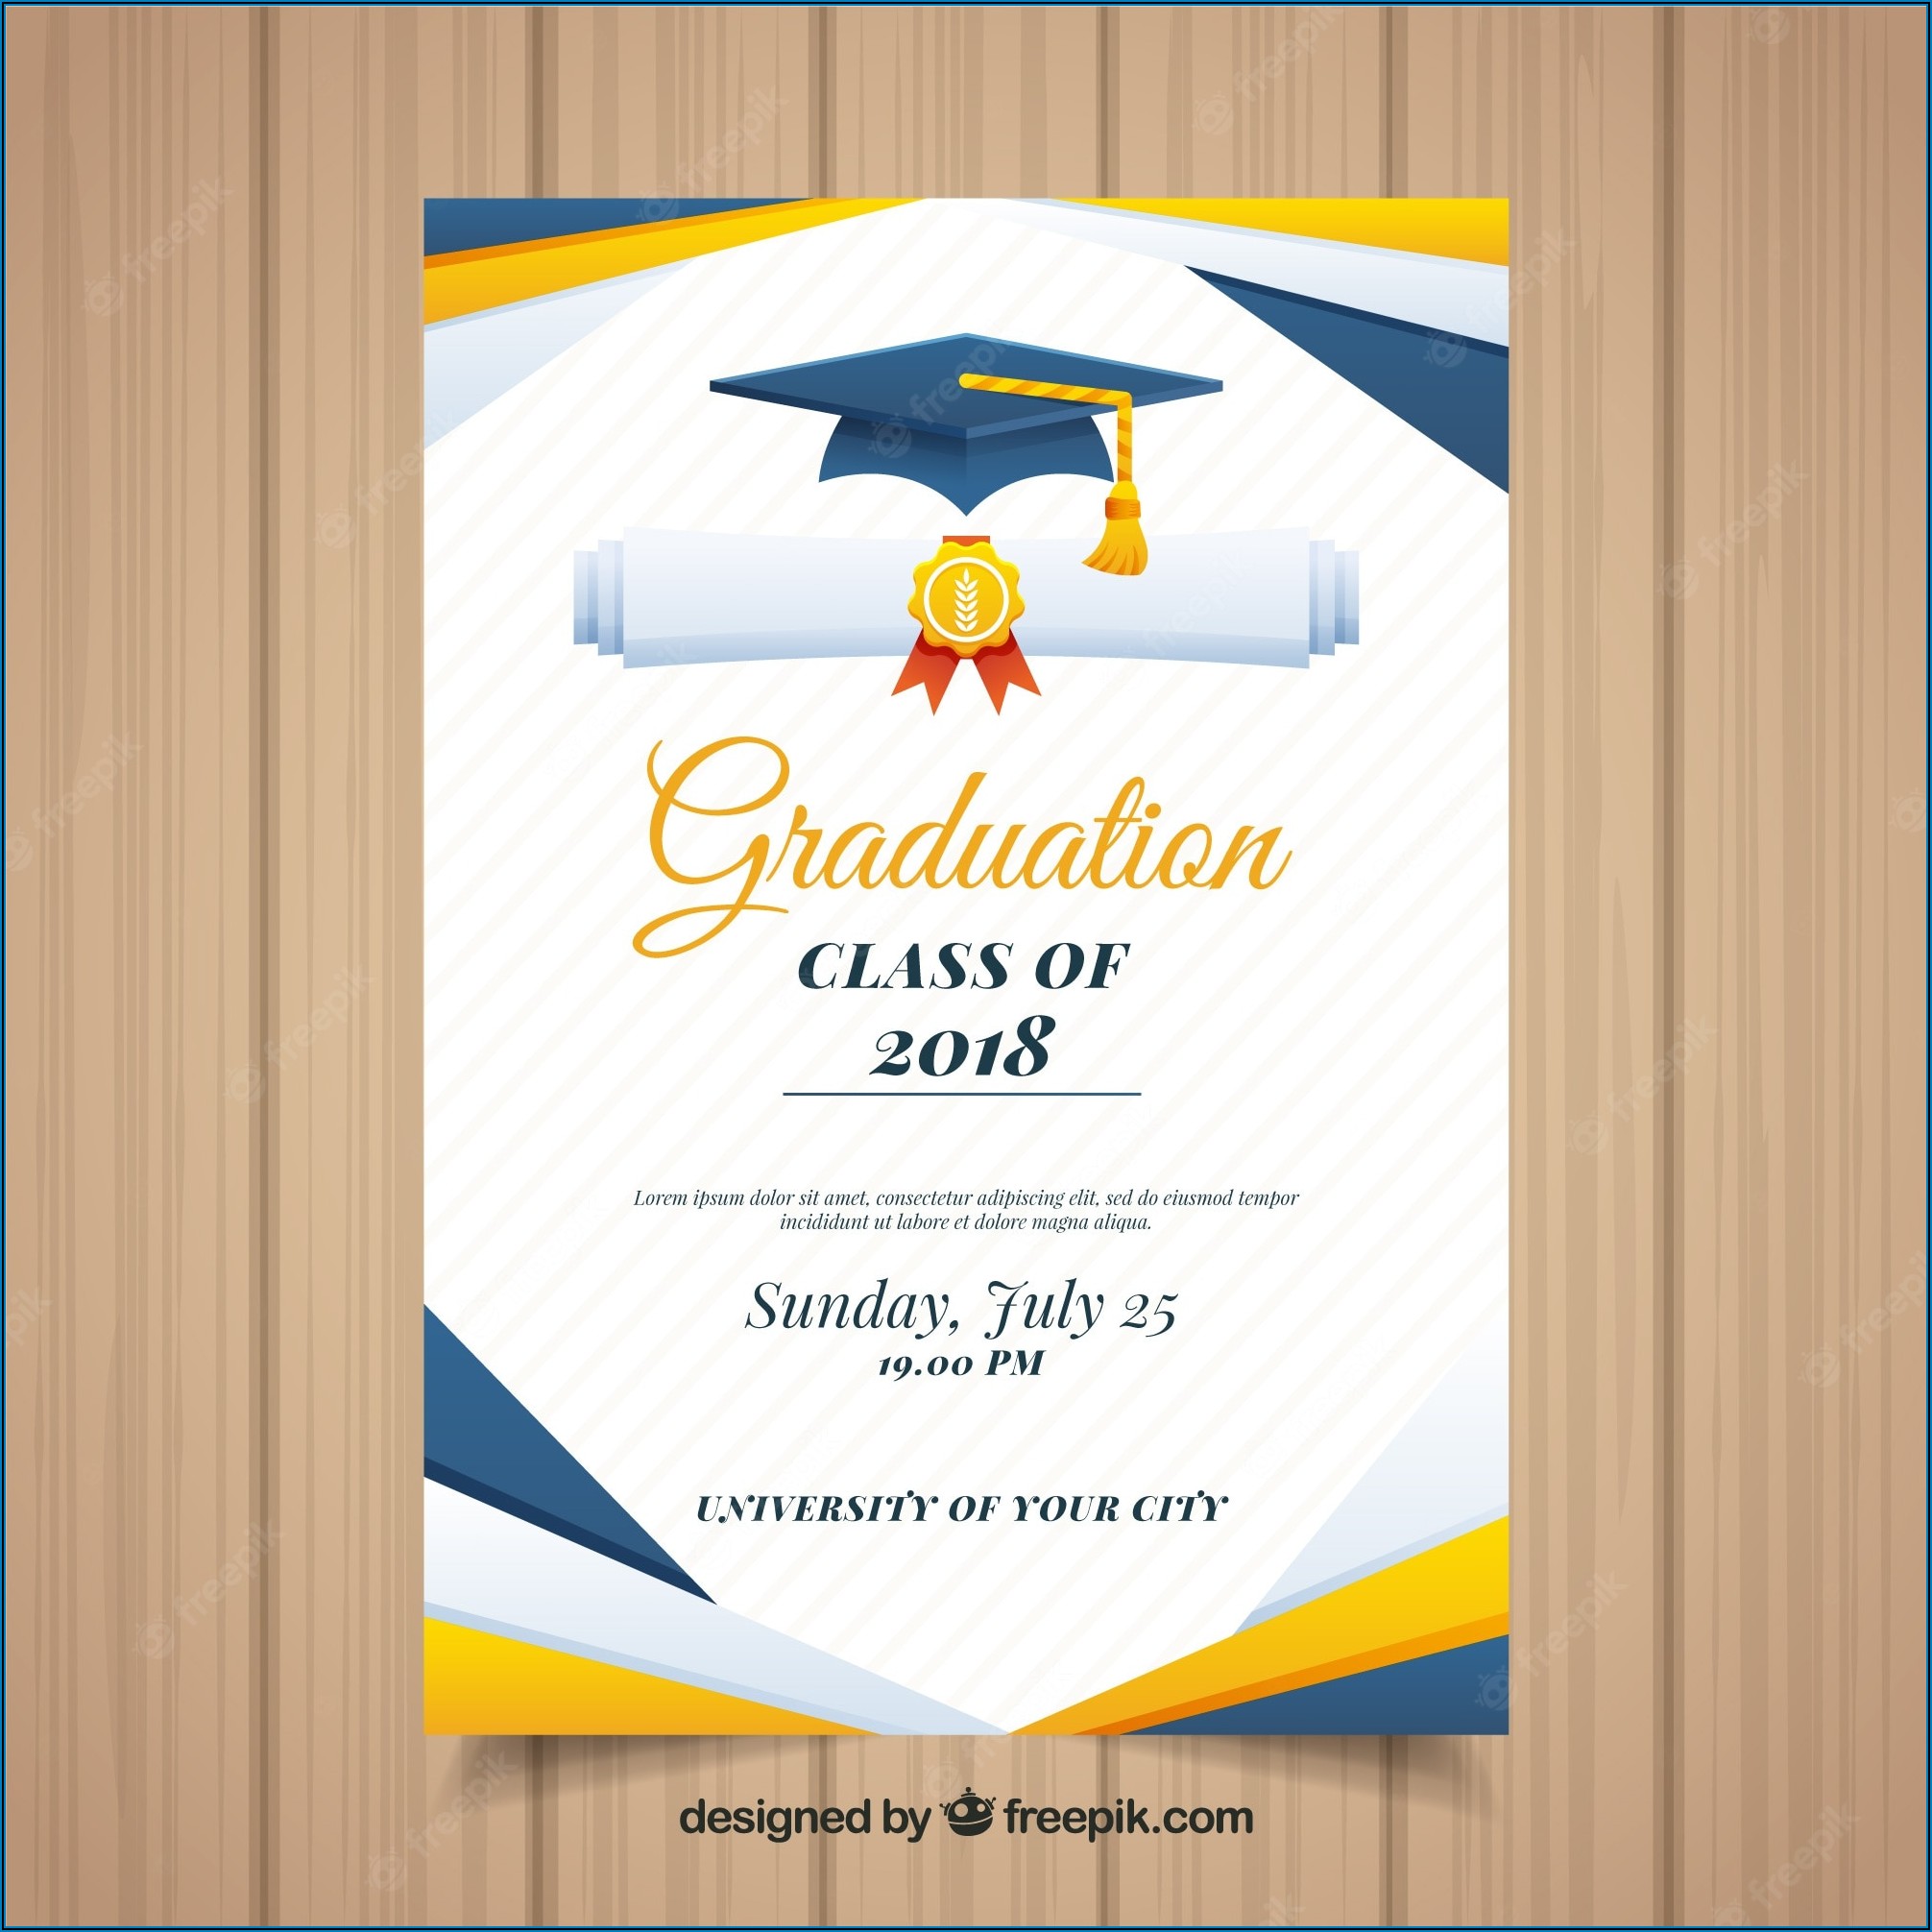 Design An Invitation Card For Graduation Ceremony